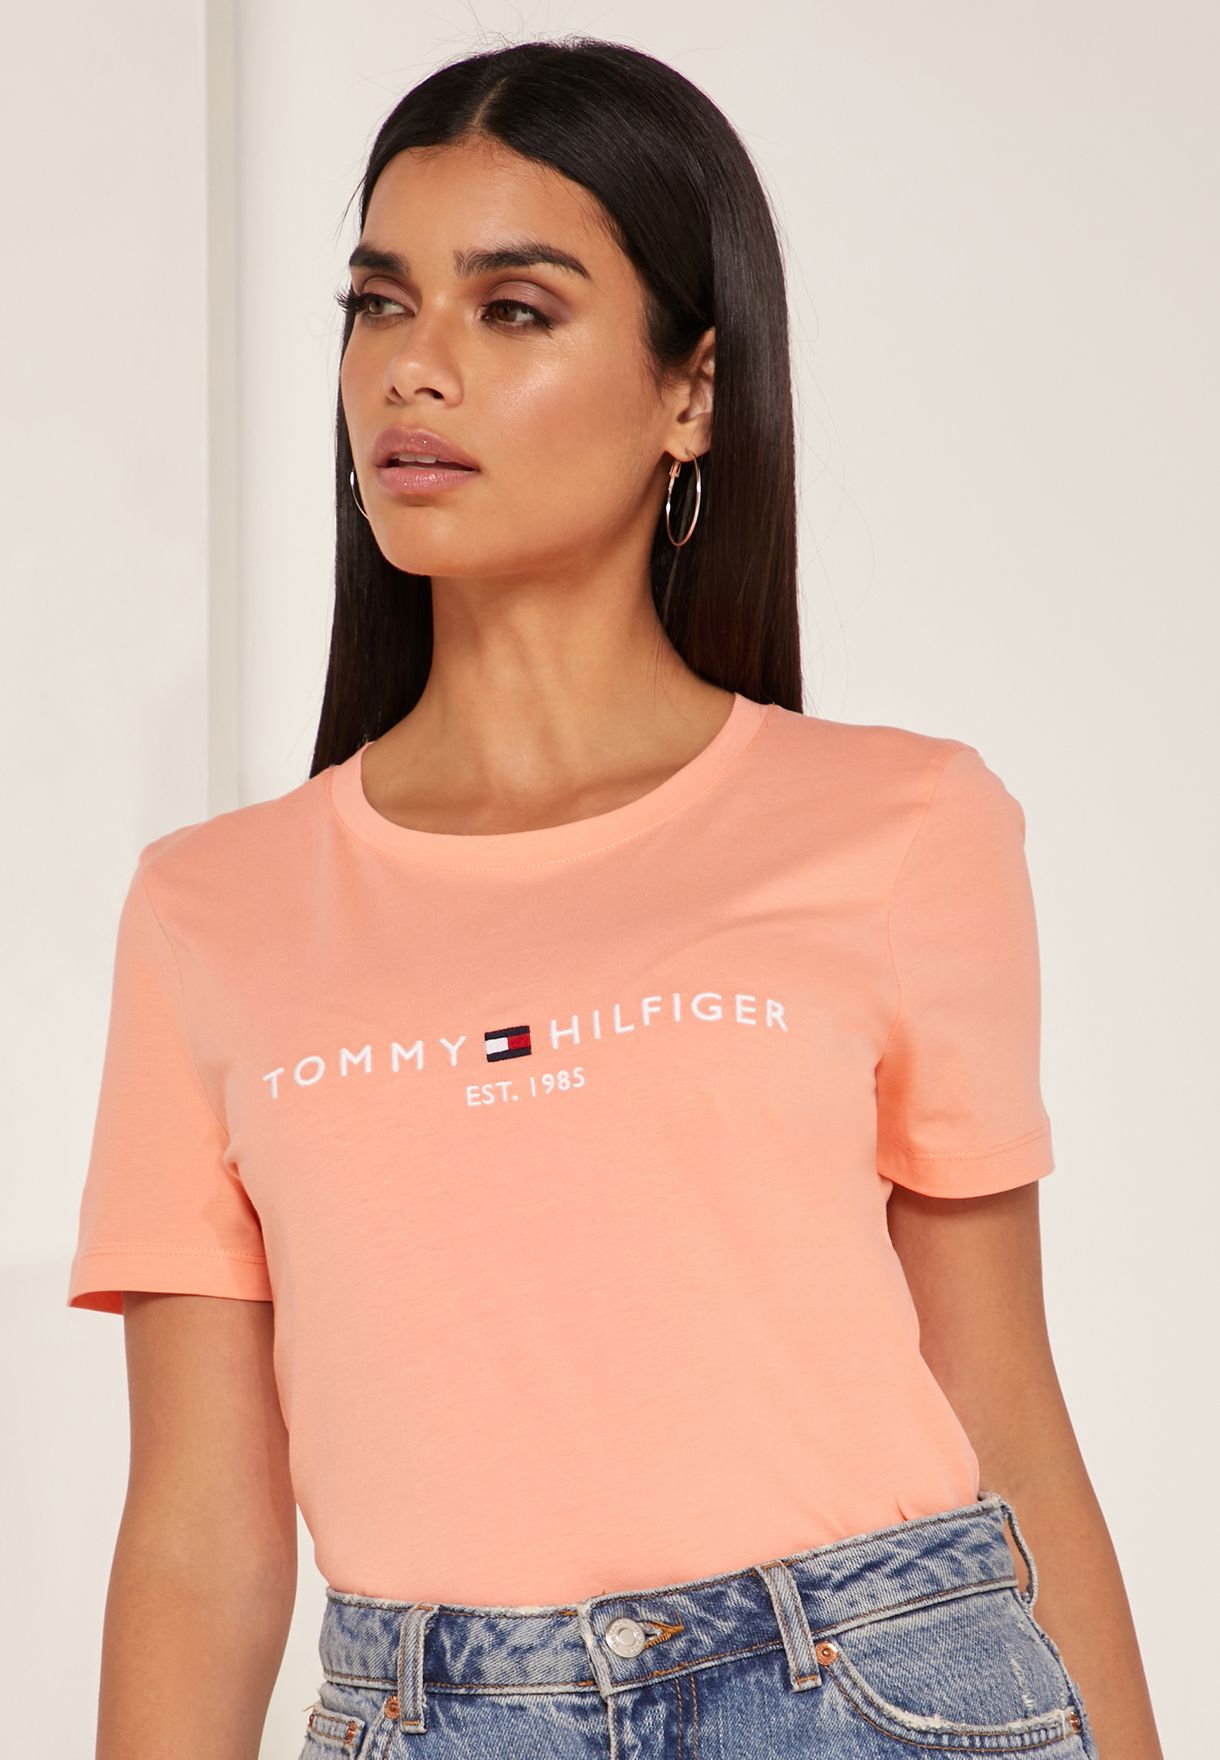 tommy hilfiger pink t shirt womens